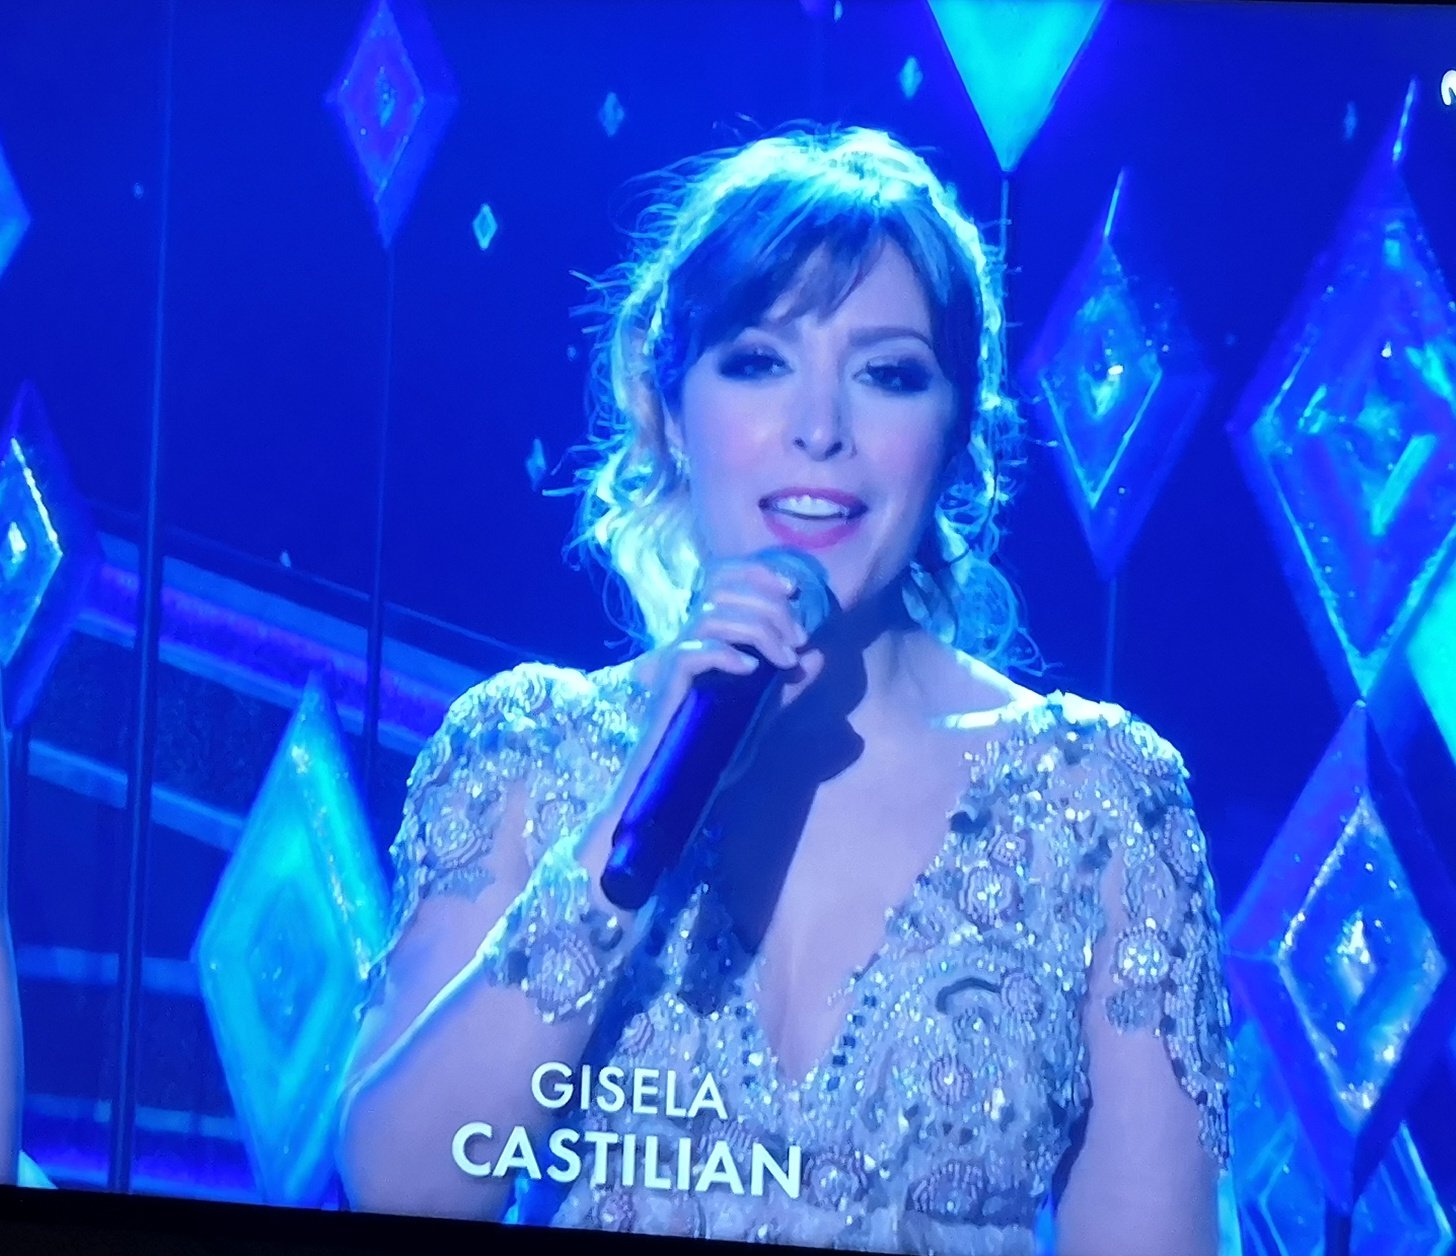 'Castilian' language label at Oscars ceremony shocks speakers of ...Castilian